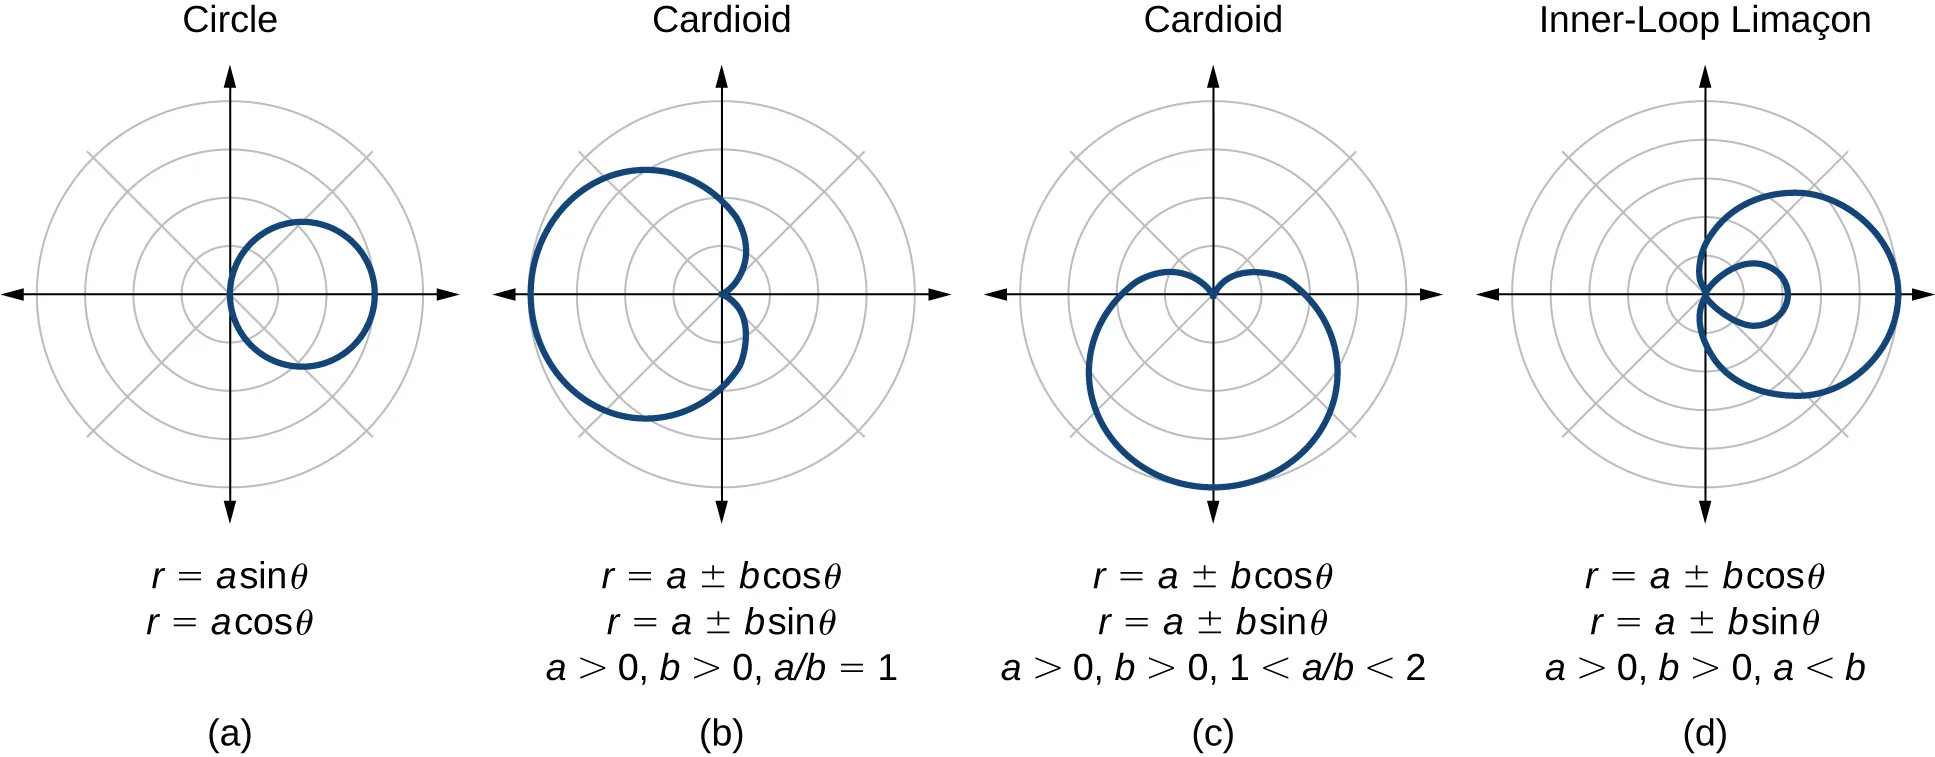 Four graphs side by side - a summary. (A) is a circle: r=asin(theta) or r=acos(theta). (B) is a cardioid: r= a + or - bcos(theta), or r = a + or - b sin(theta). a>0, b>0, a/b=1. (C) is one-loop limaçons. r= a + or - bcos(theta), or r= a + or - bsin(theta). a>0, b>0, 1<a/b<2. (D) is inner-loop limaçons. R = a + or - bcos(theta), or r = a + or - bsin(theta). A>0, b>0, a<b.